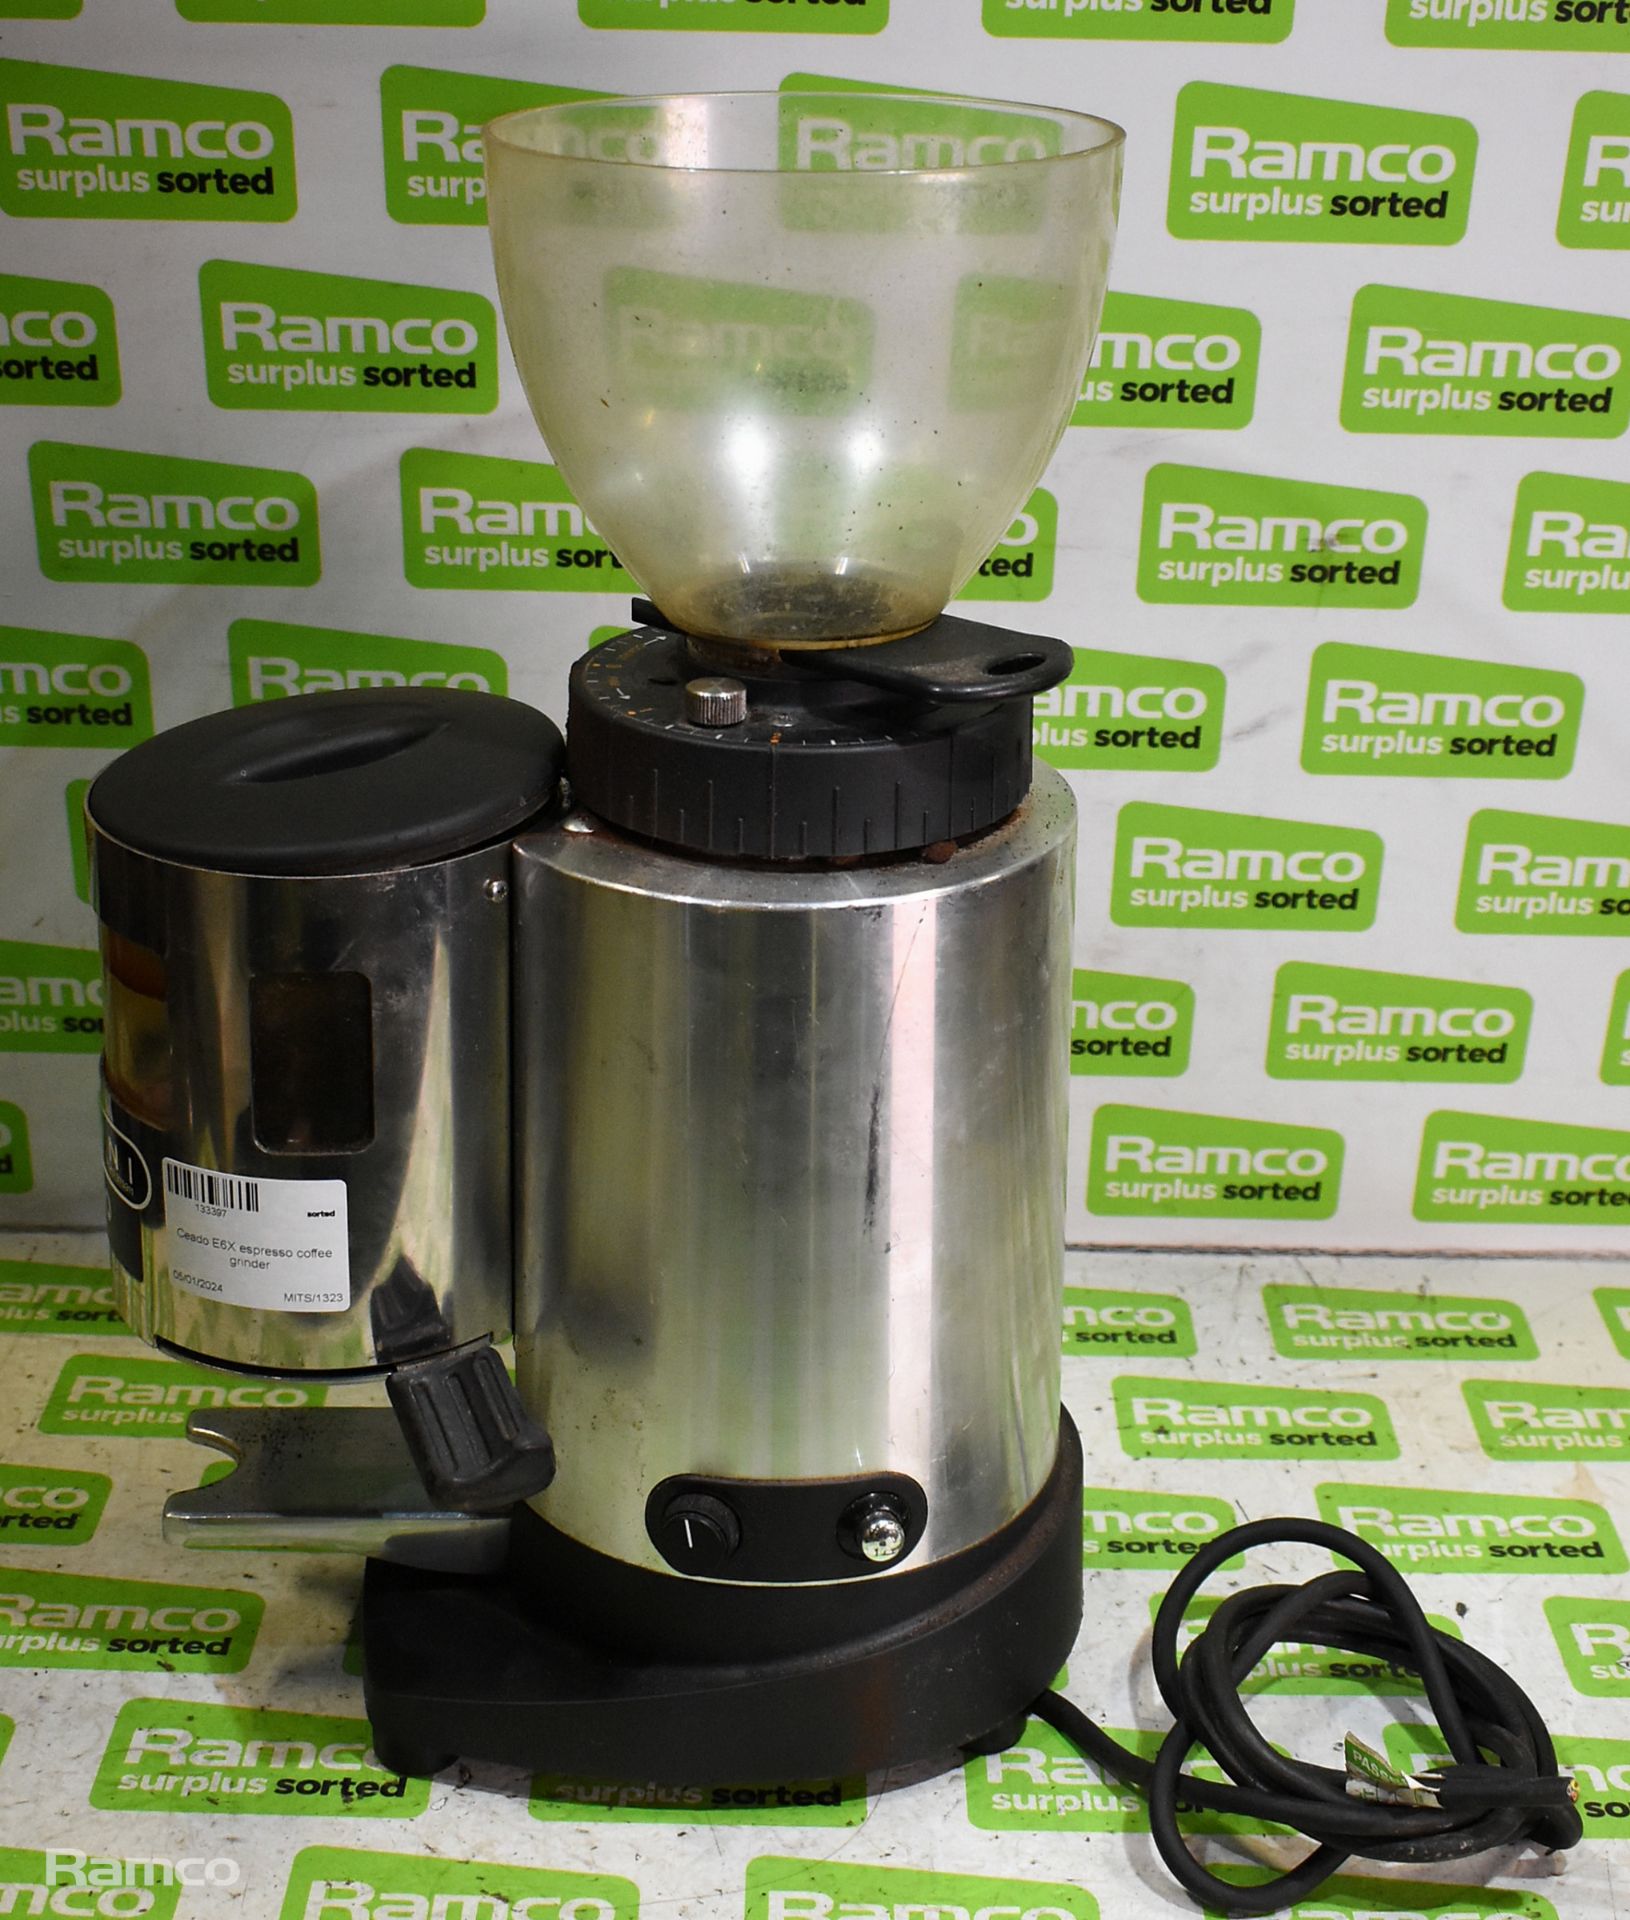 2x Ceado E6X espresso coffee grinders - Image 7 of 9